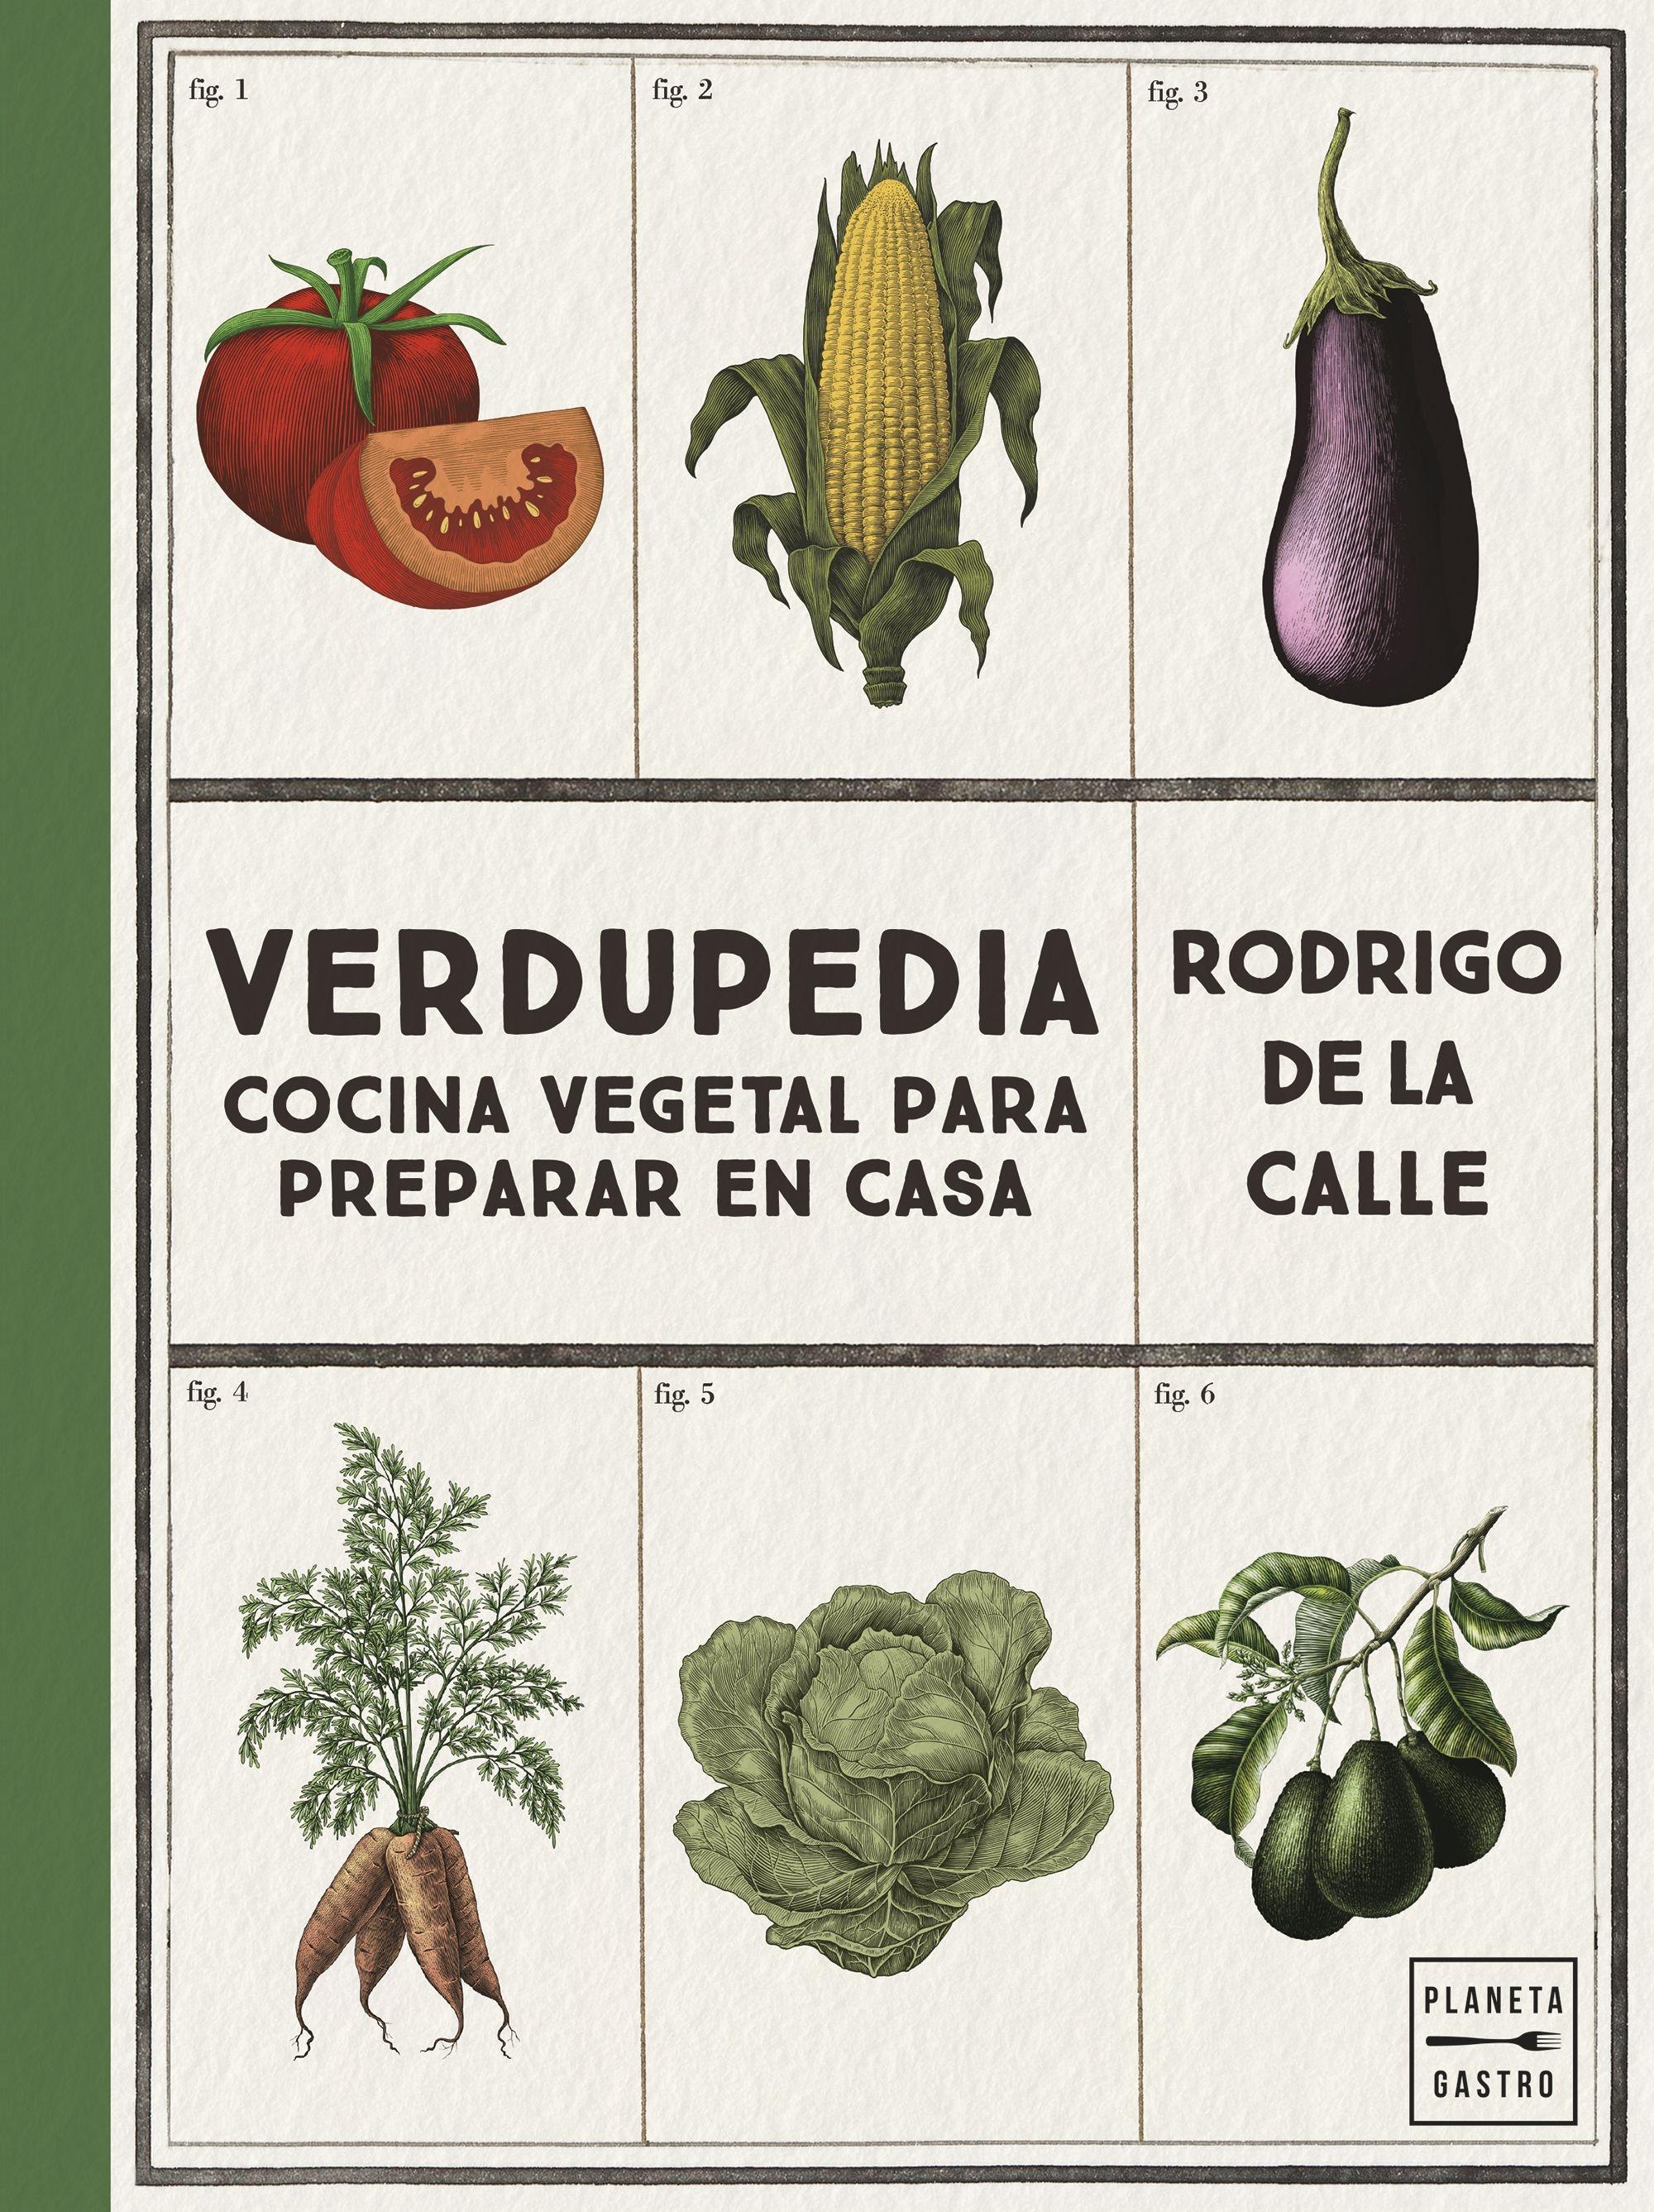 Verdupedia "Cocina Vegetal para Preparar en Casa". 